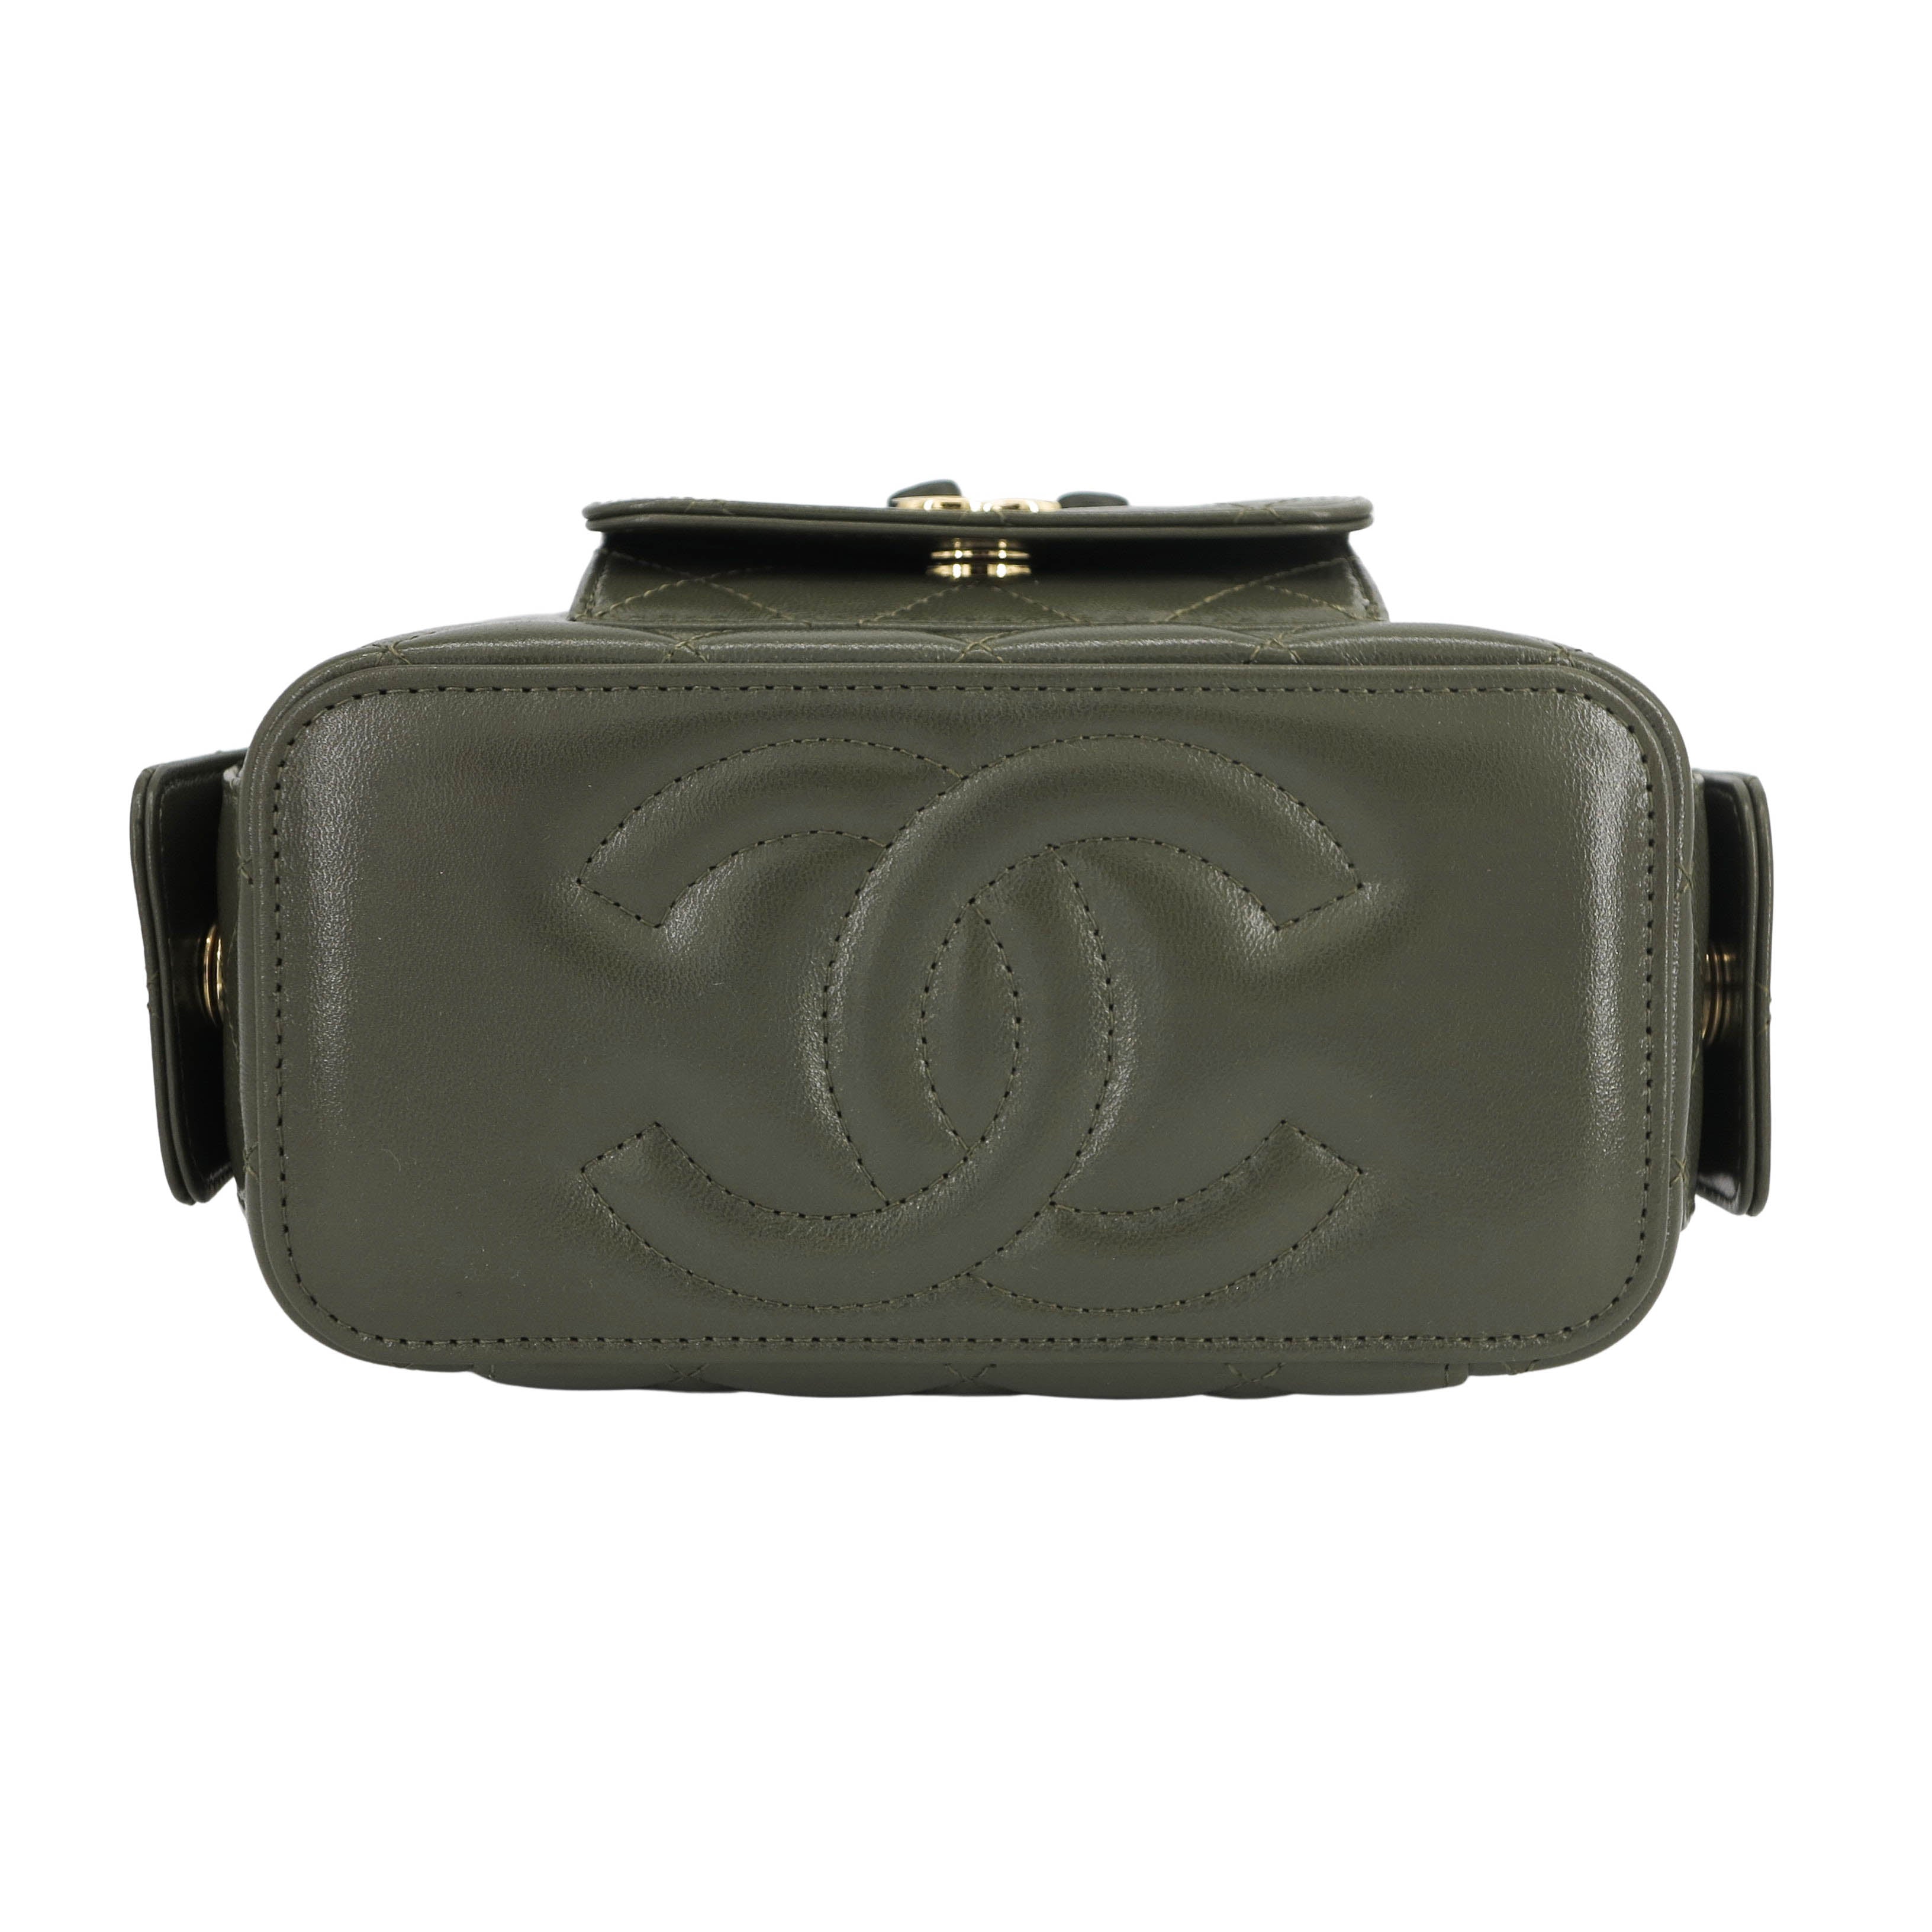 22K Small Vanity Case with Mini Pockets in Khaki Green Calfskin